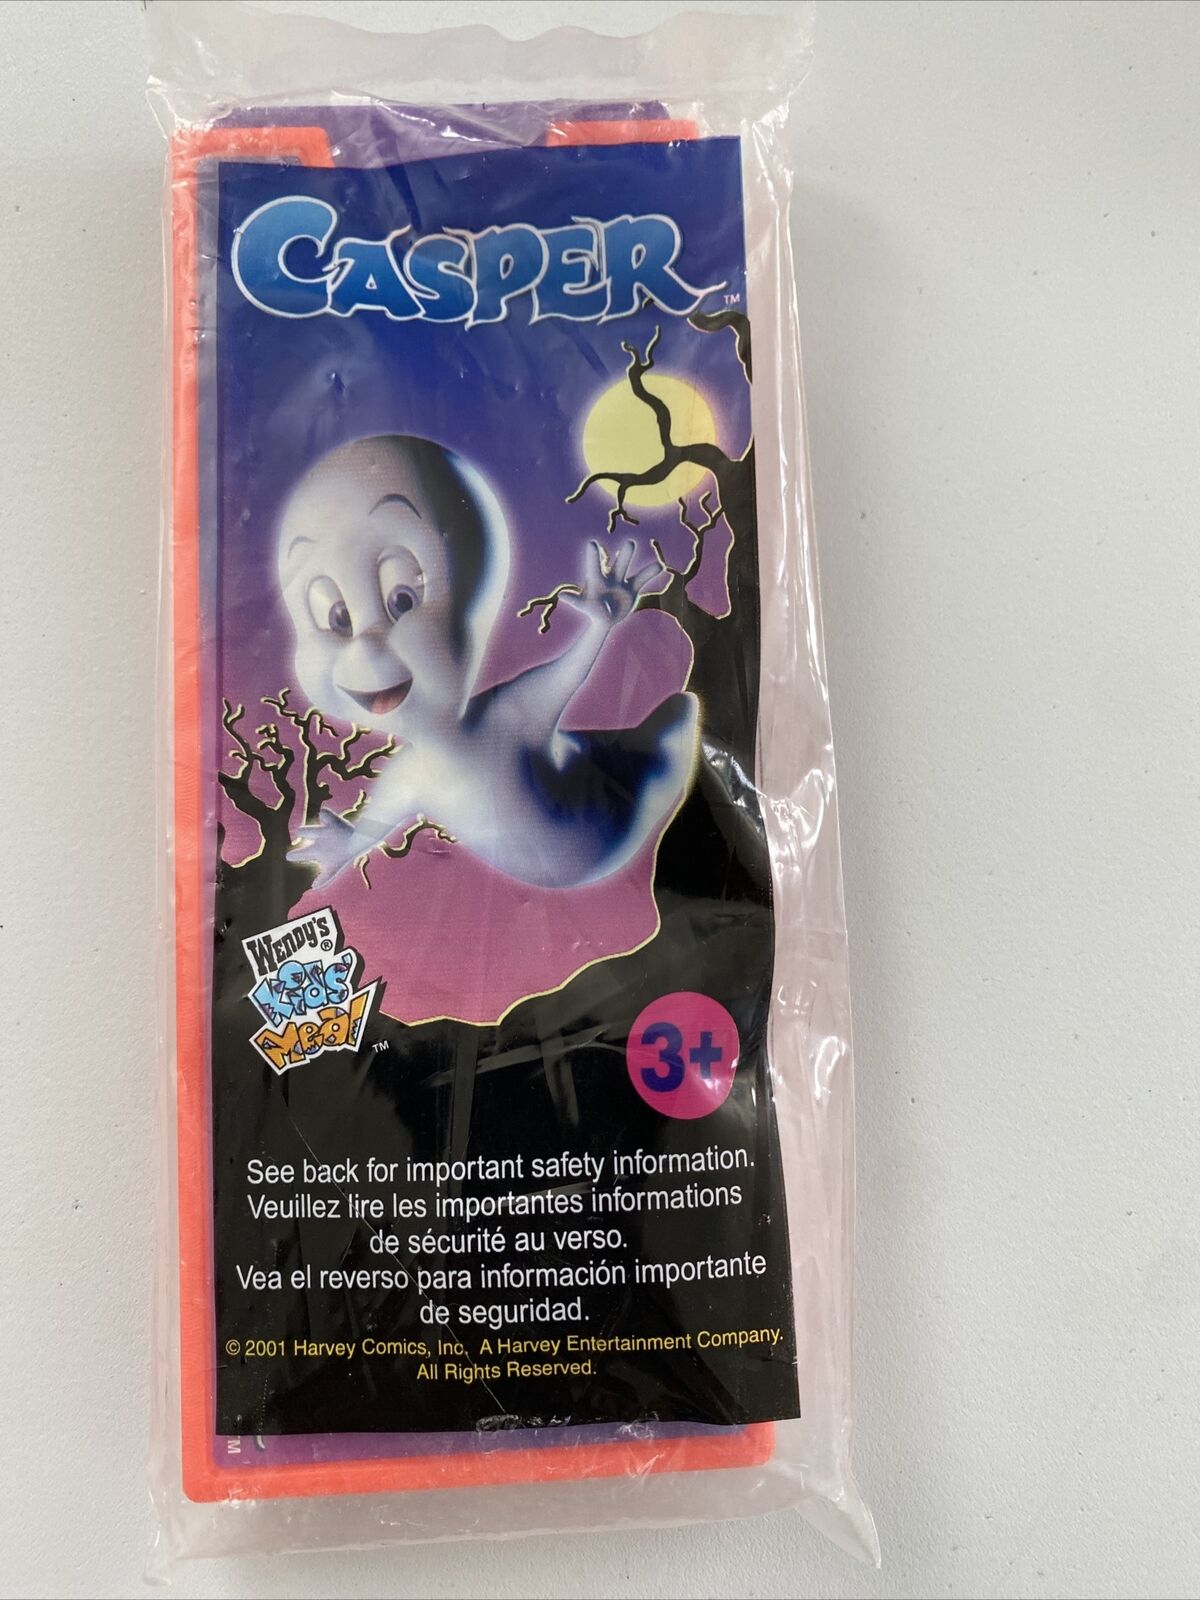 2001 Harvey Comics Vintage Wendy’s Kids Meal Casper Toy